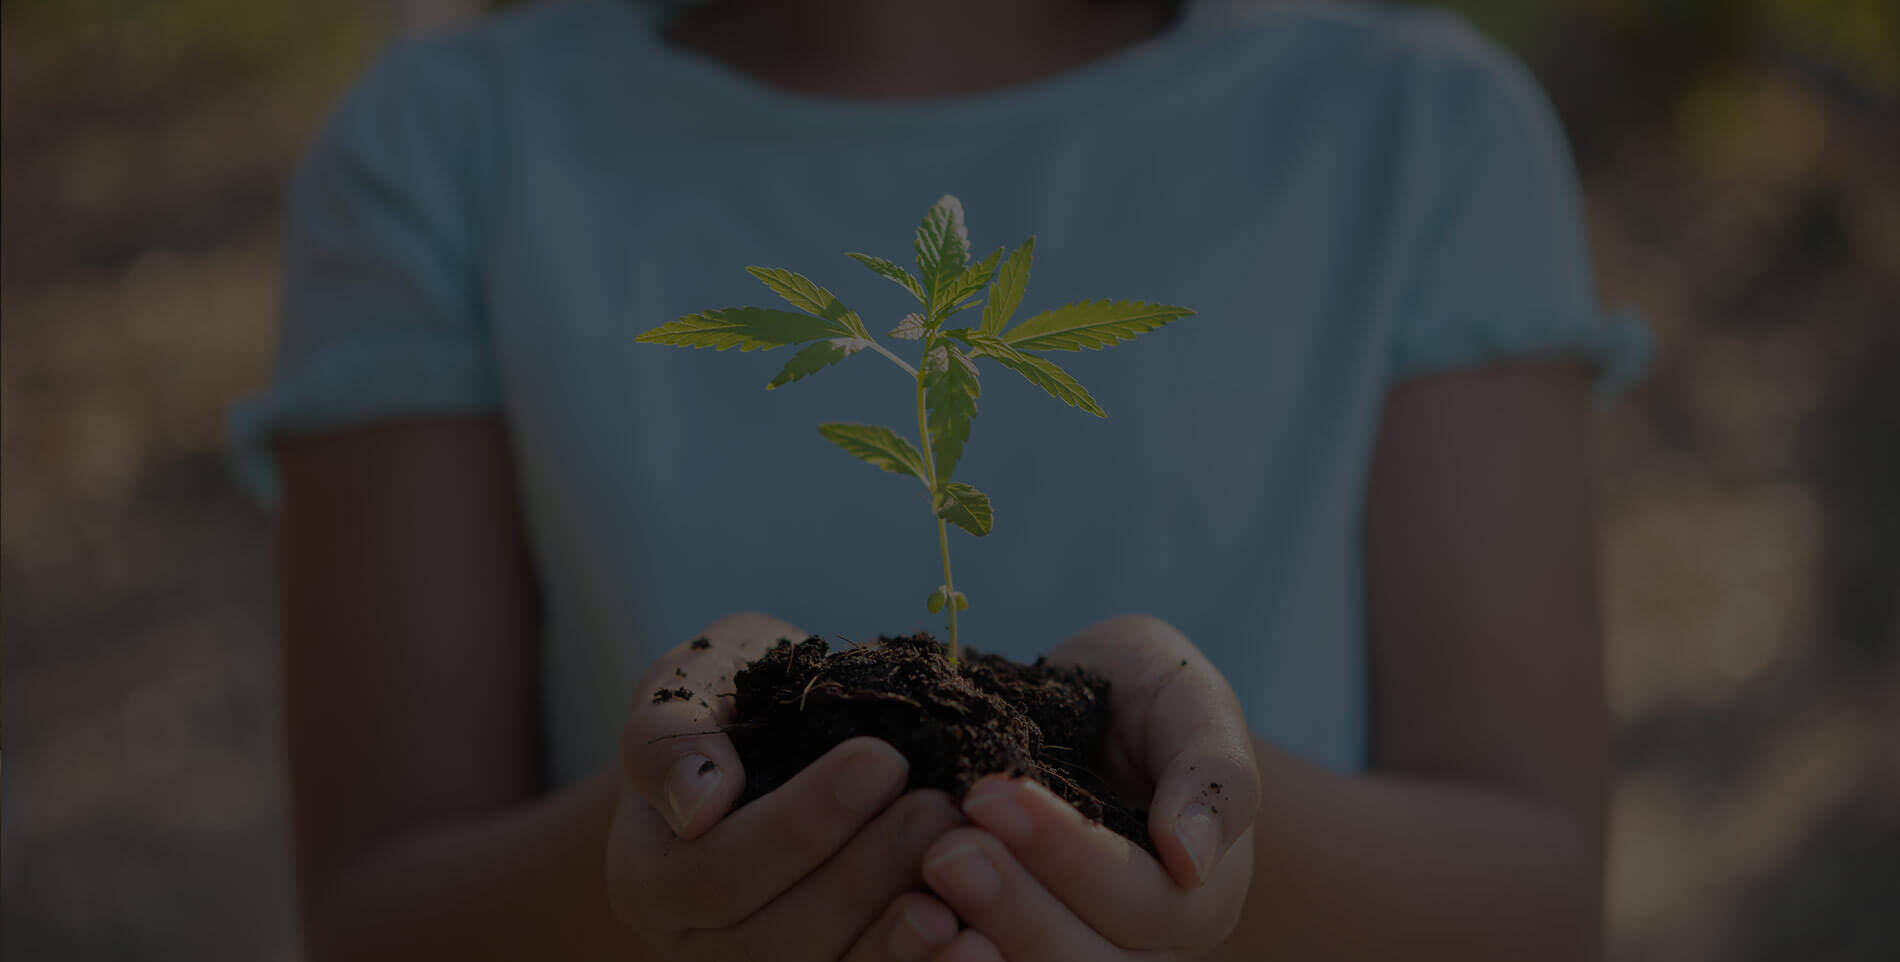 Discover how to germinate marijuana seeds efficiently